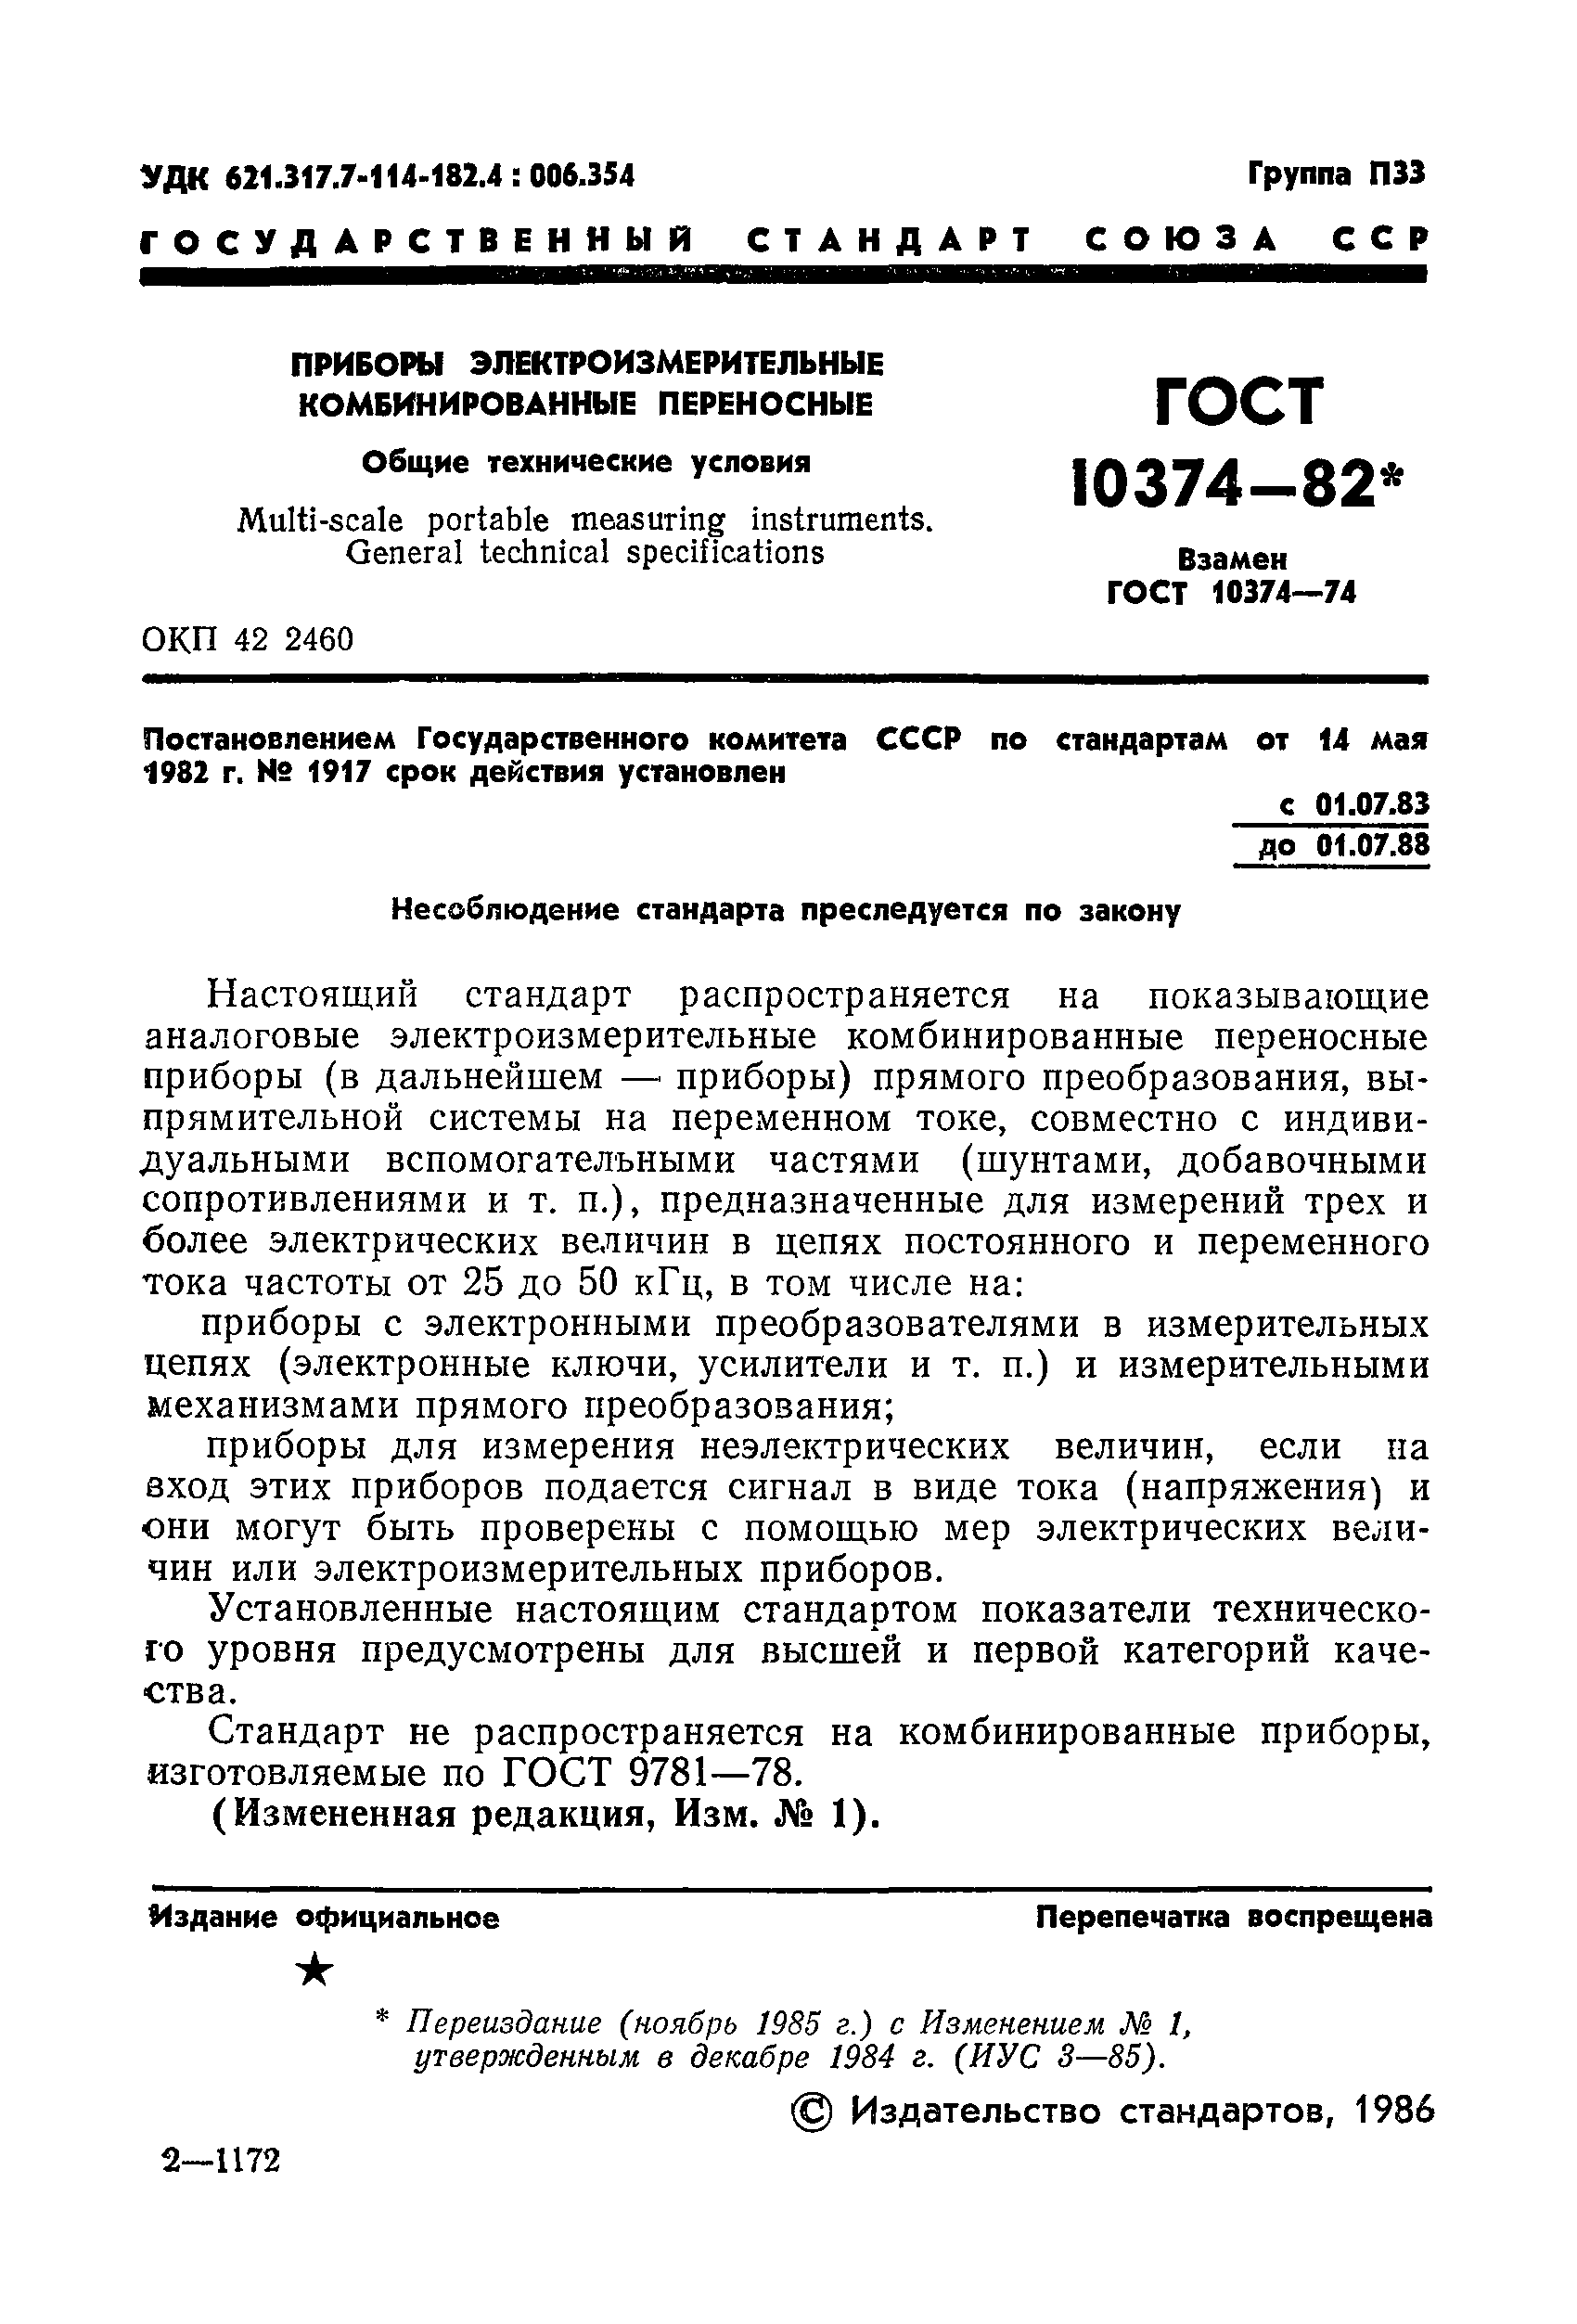 ГОСТ 10374-82